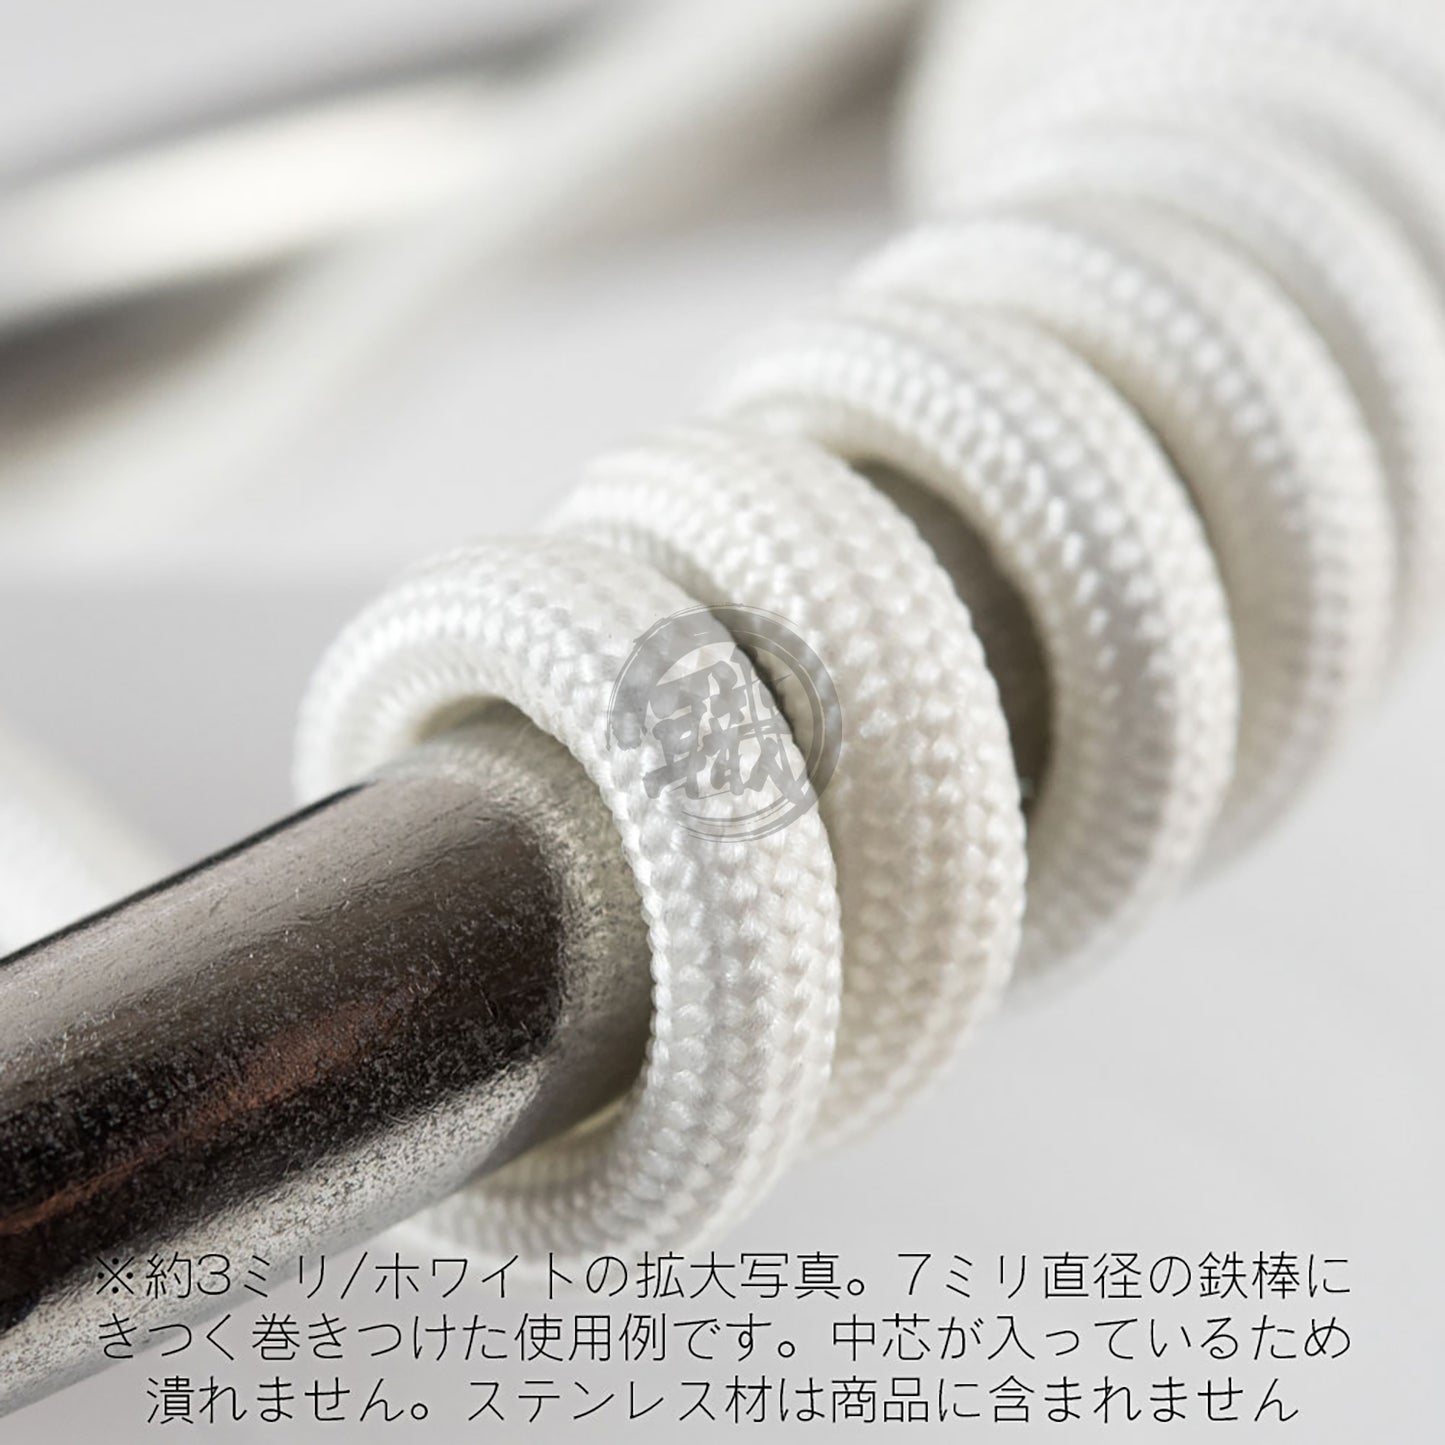 Mesh Wire [White] [3.0mm] - ShokuninGunpla